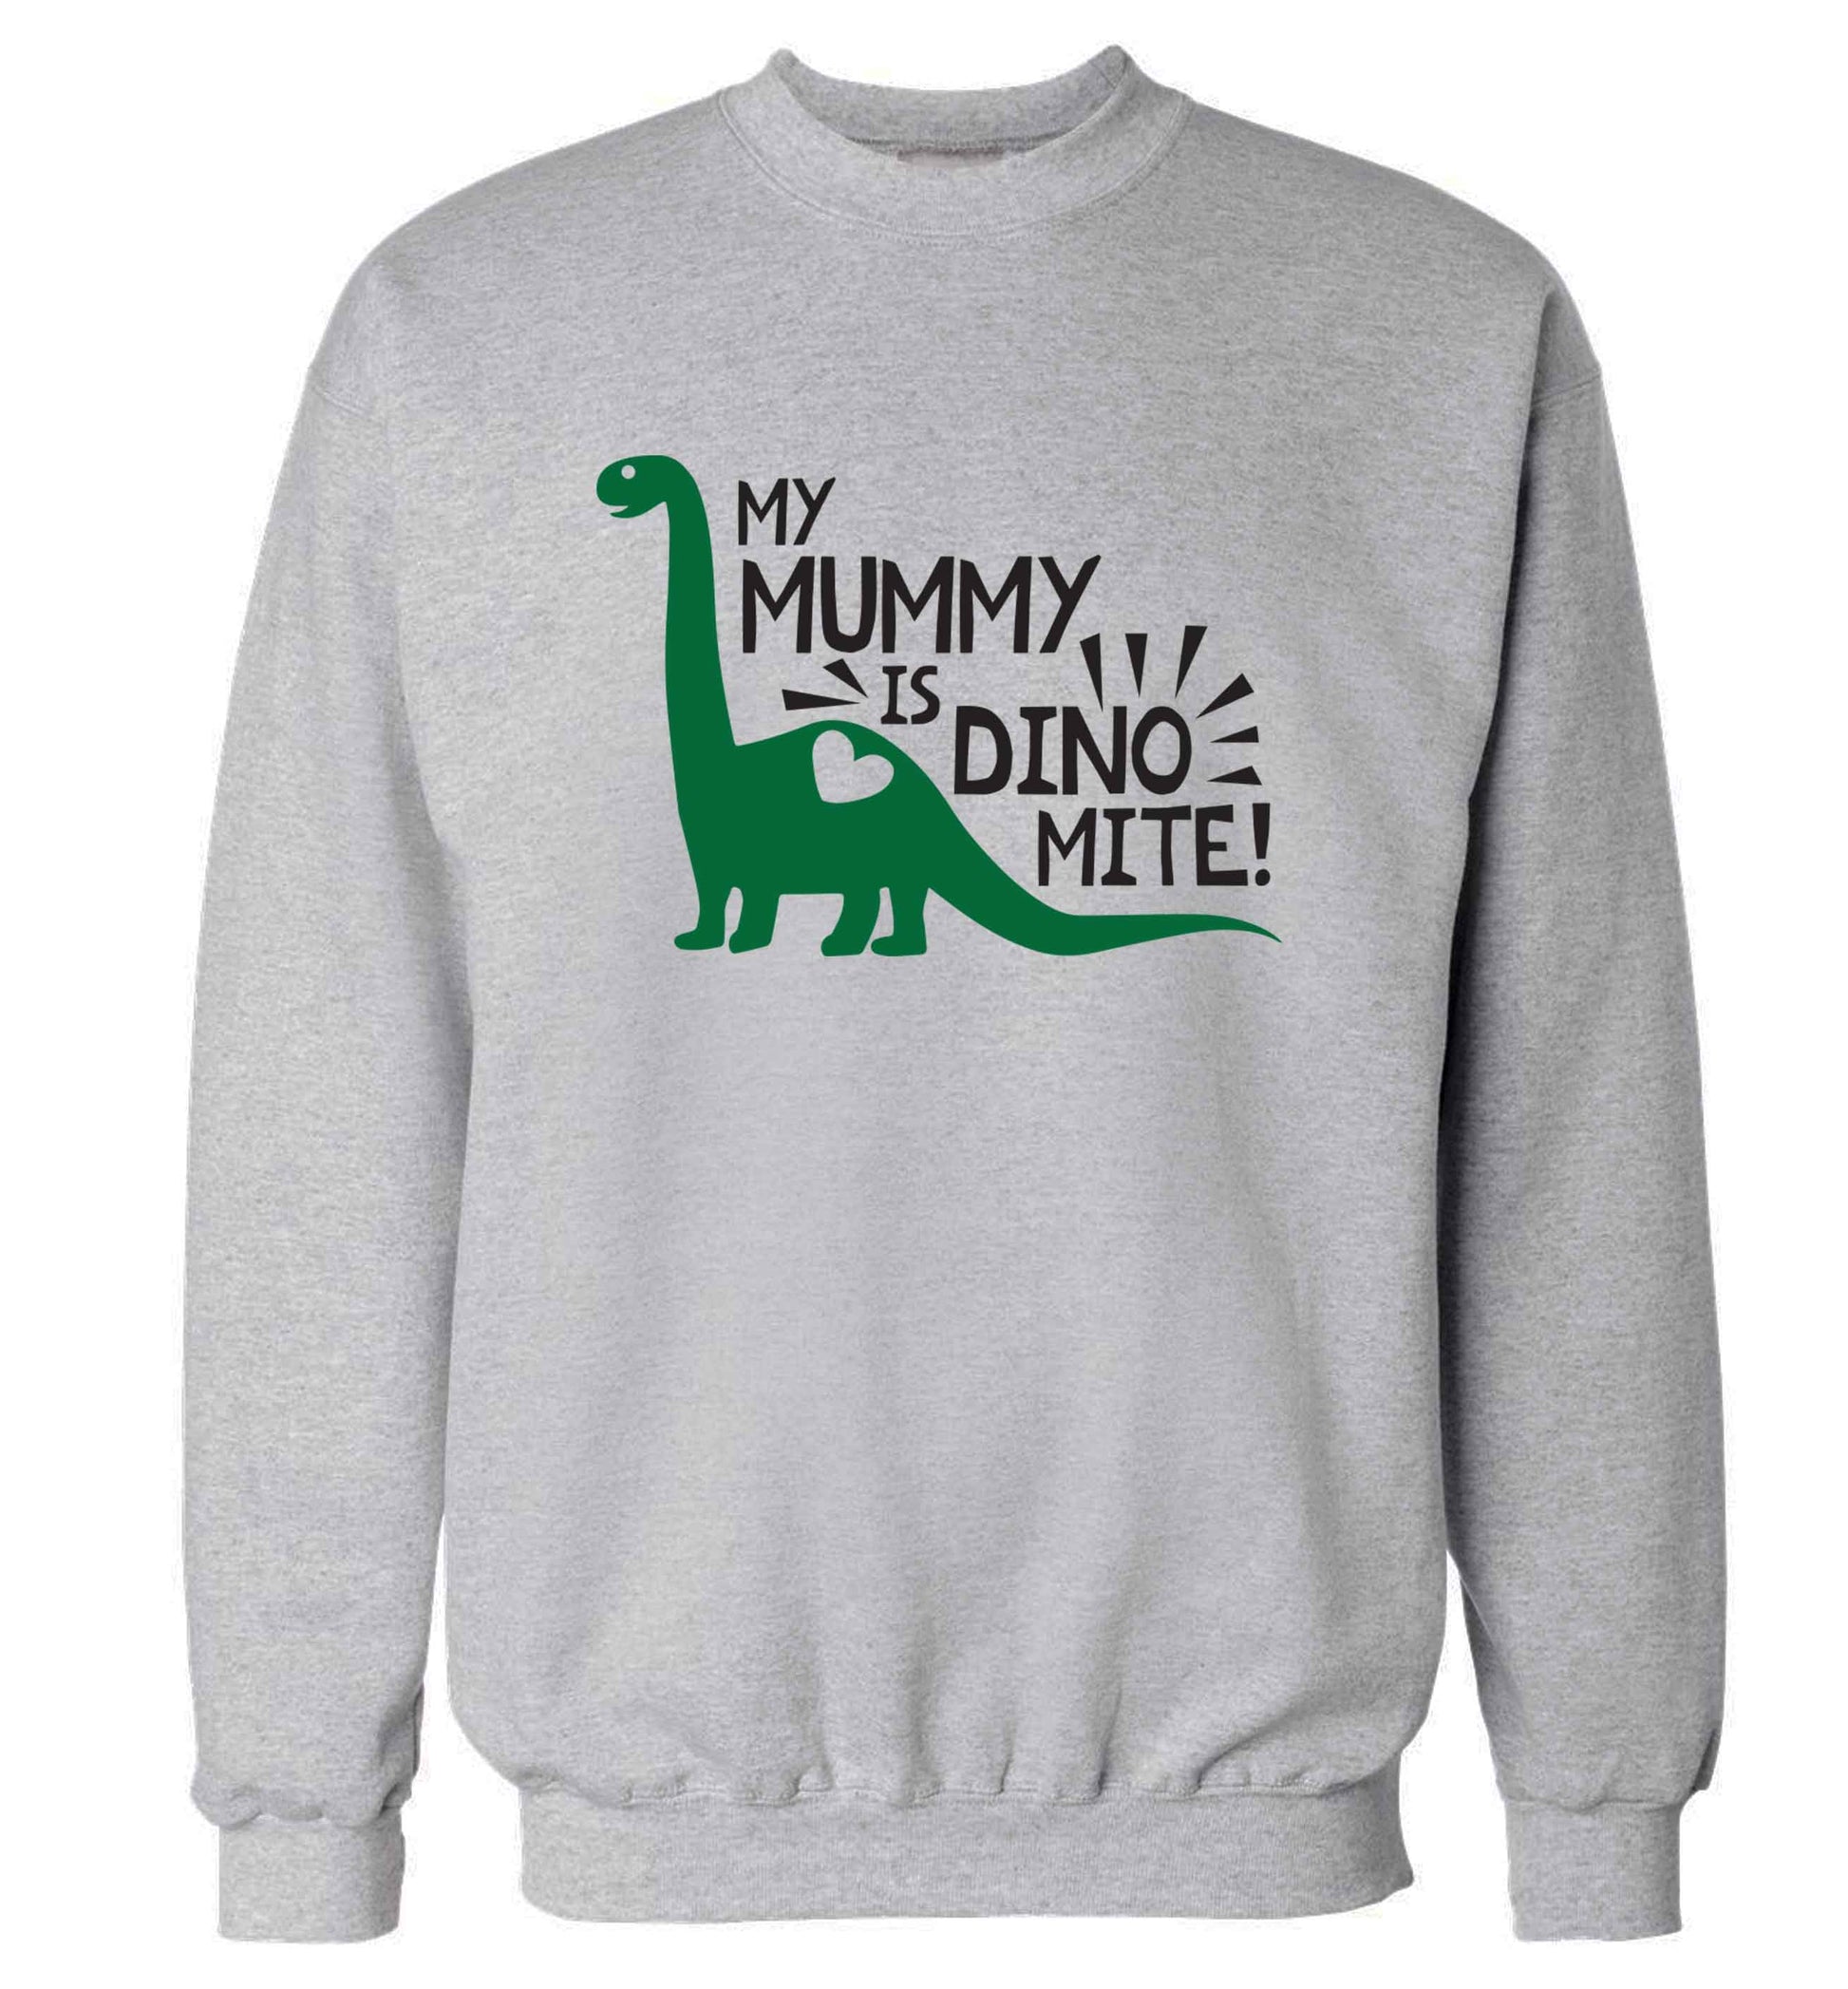 My mummy is dinomite adult's unisex grey sweater 2XL